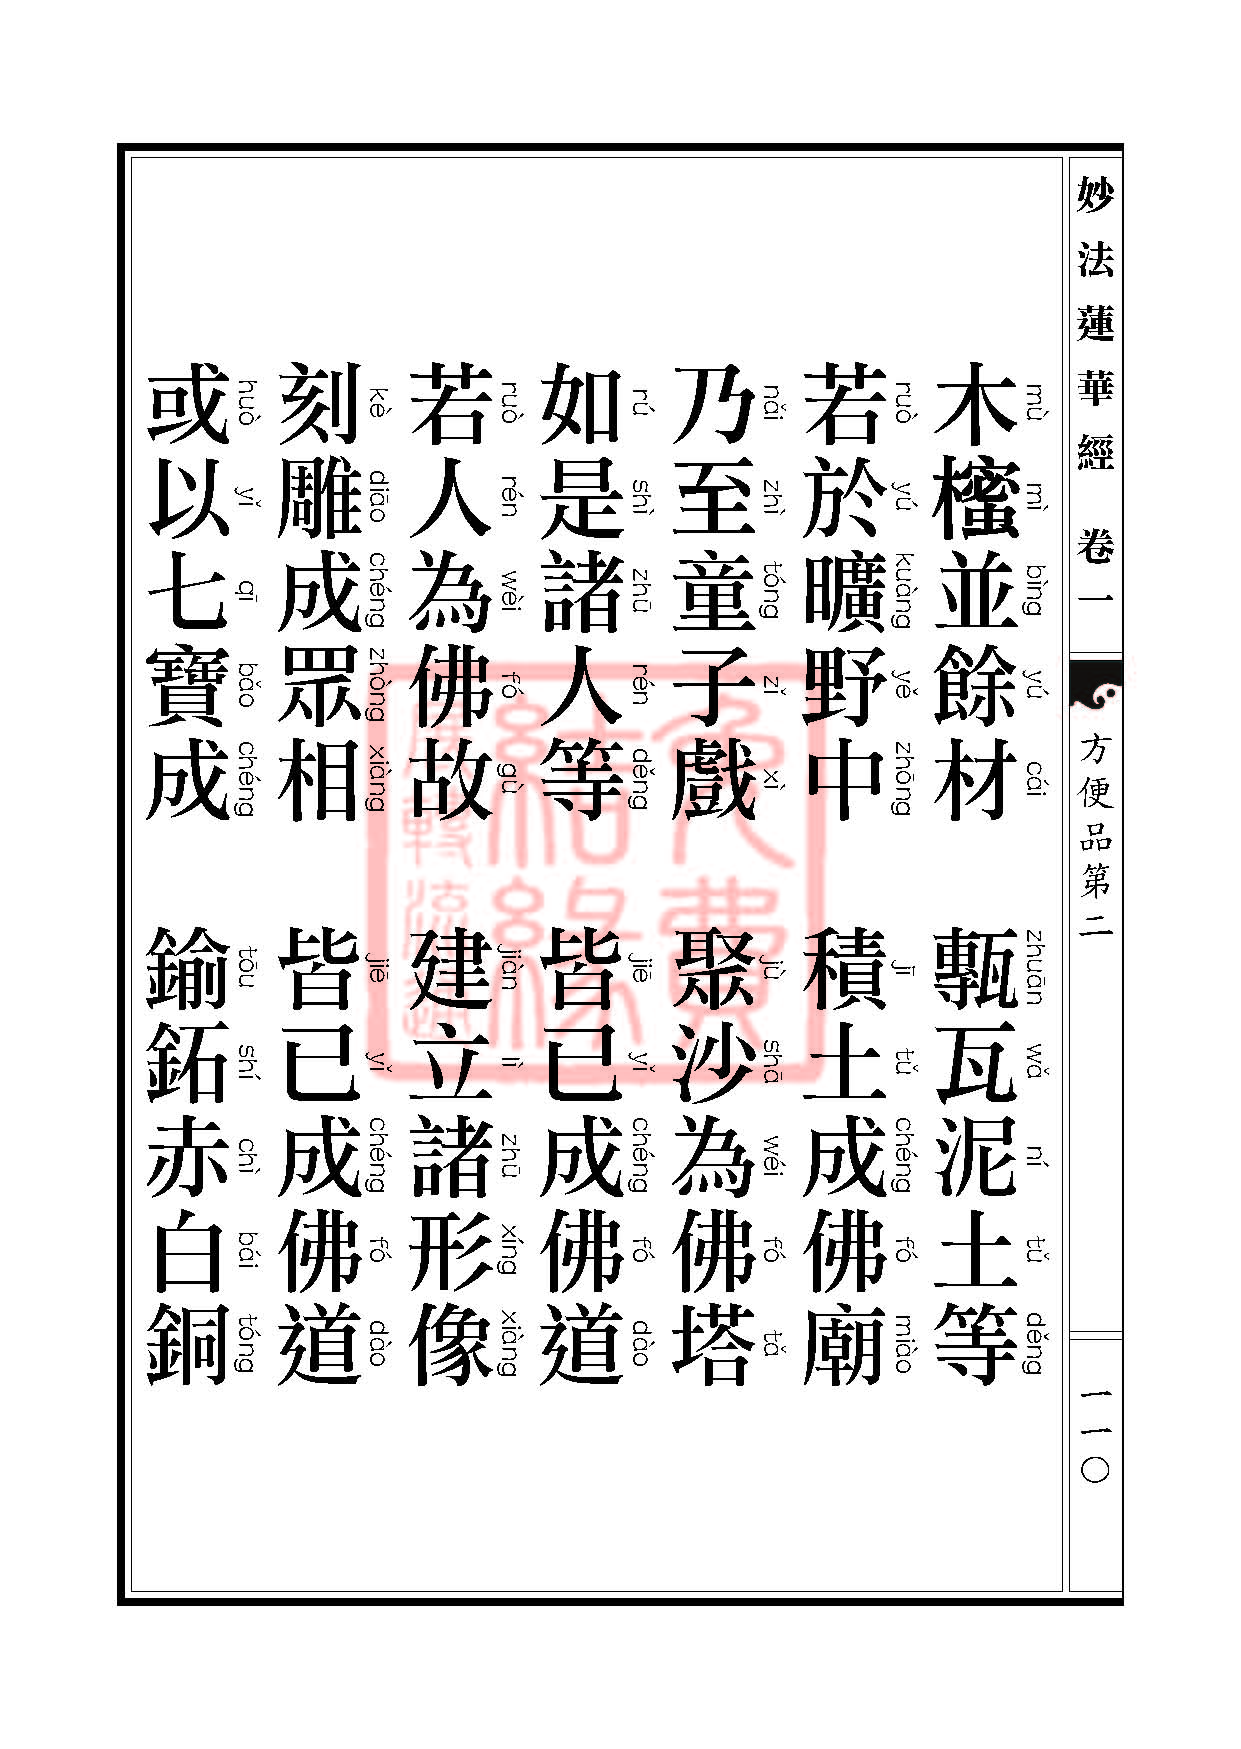 Book_FHJ_HK-A6-PY_Web_ҳ_110.jpg